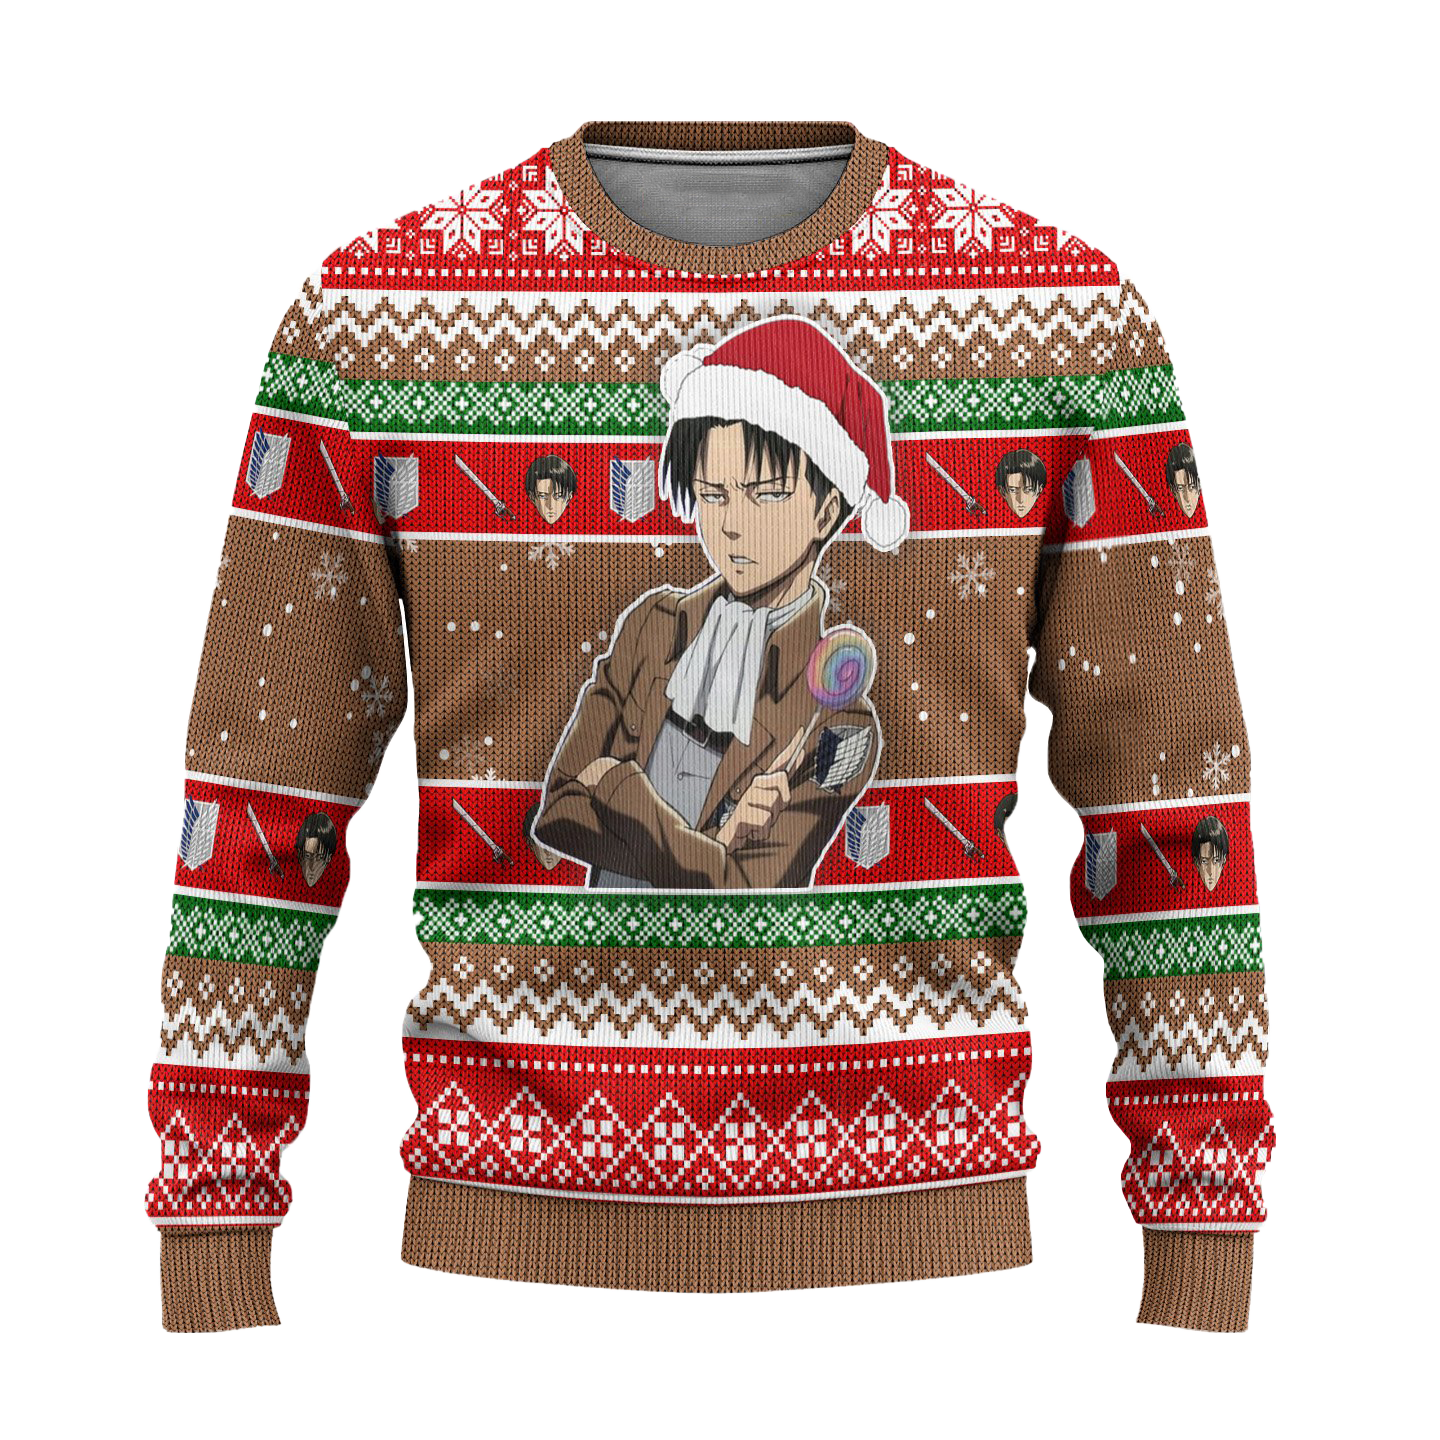 Levi Ackerman Attack on Titan Anime Ugly Christmas Sweater Xmas Gift